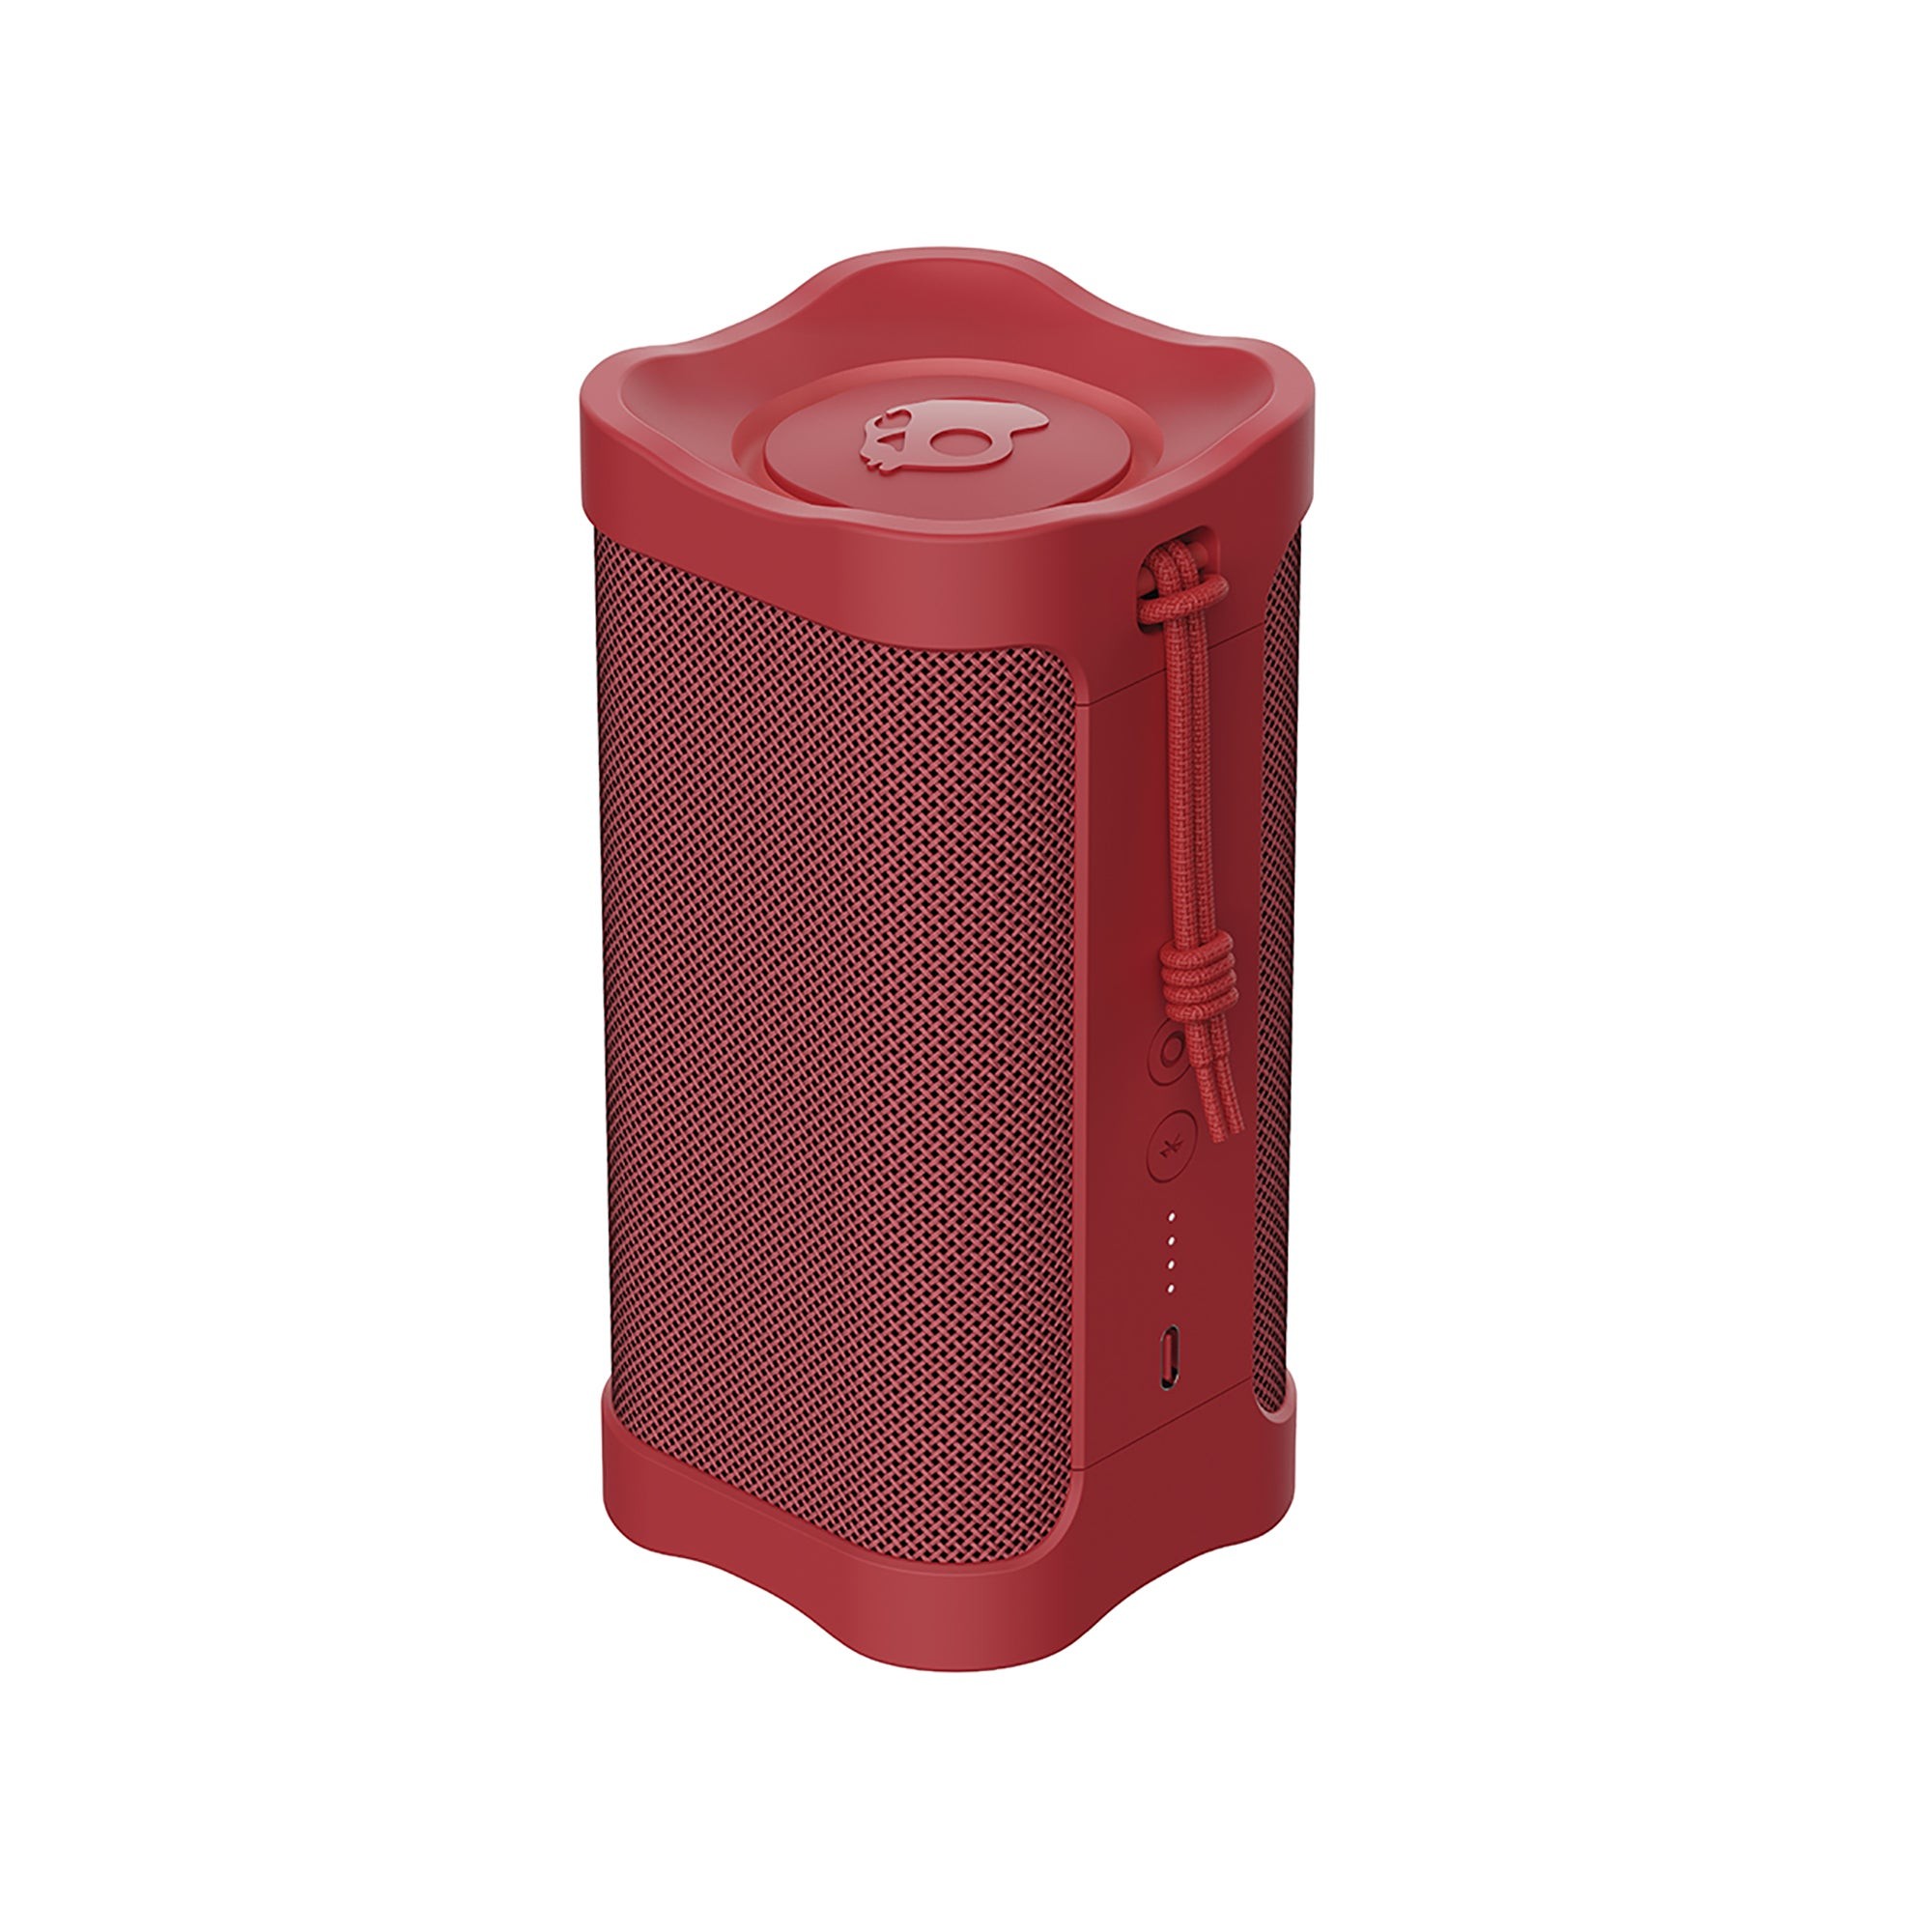 Terrain Portable Wireless Speaker Astro Dust Red